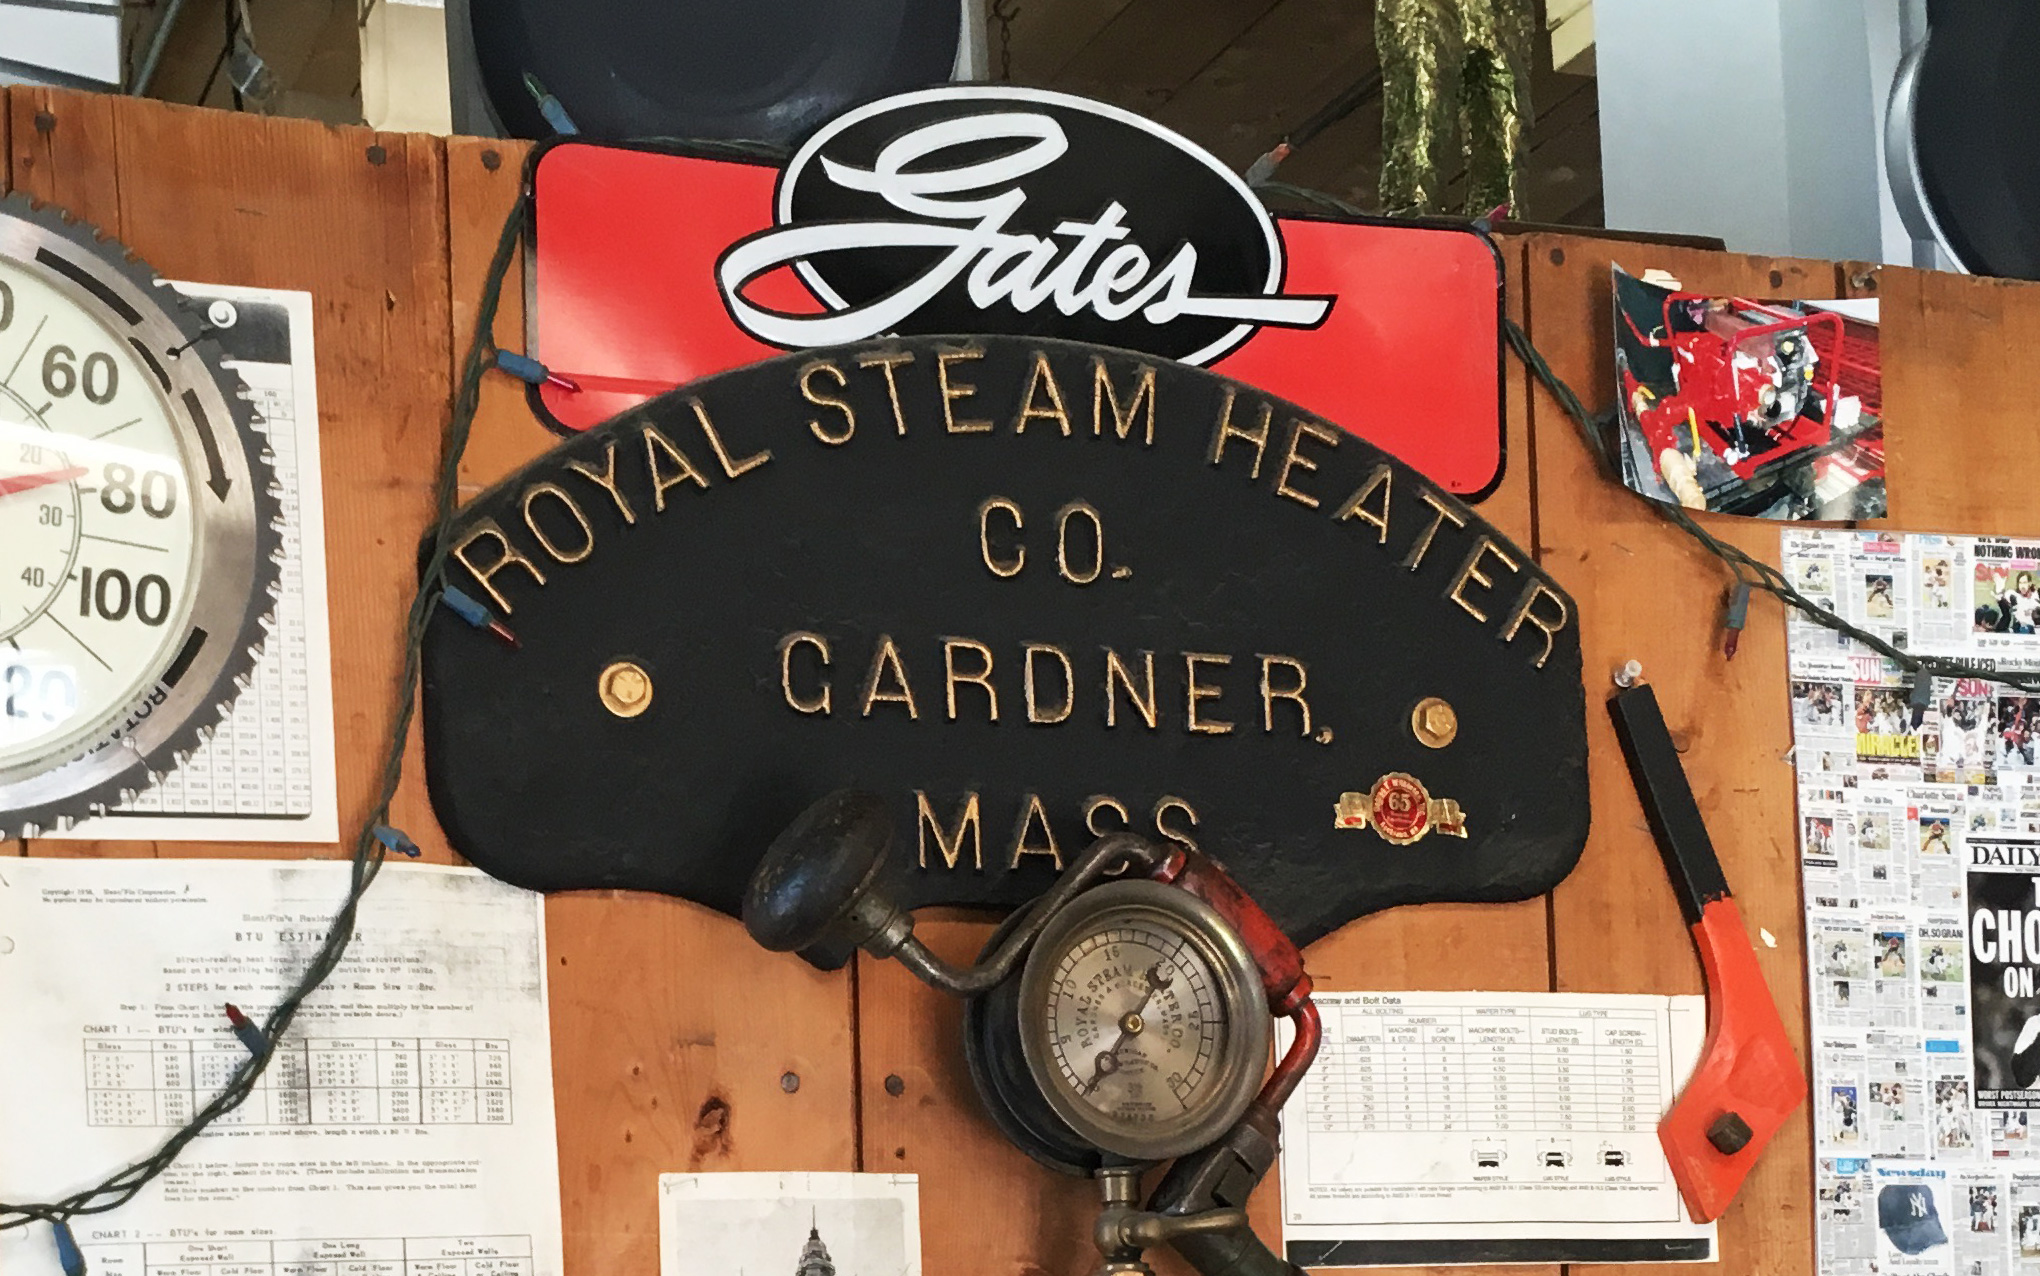 Royal Steam Heater entry